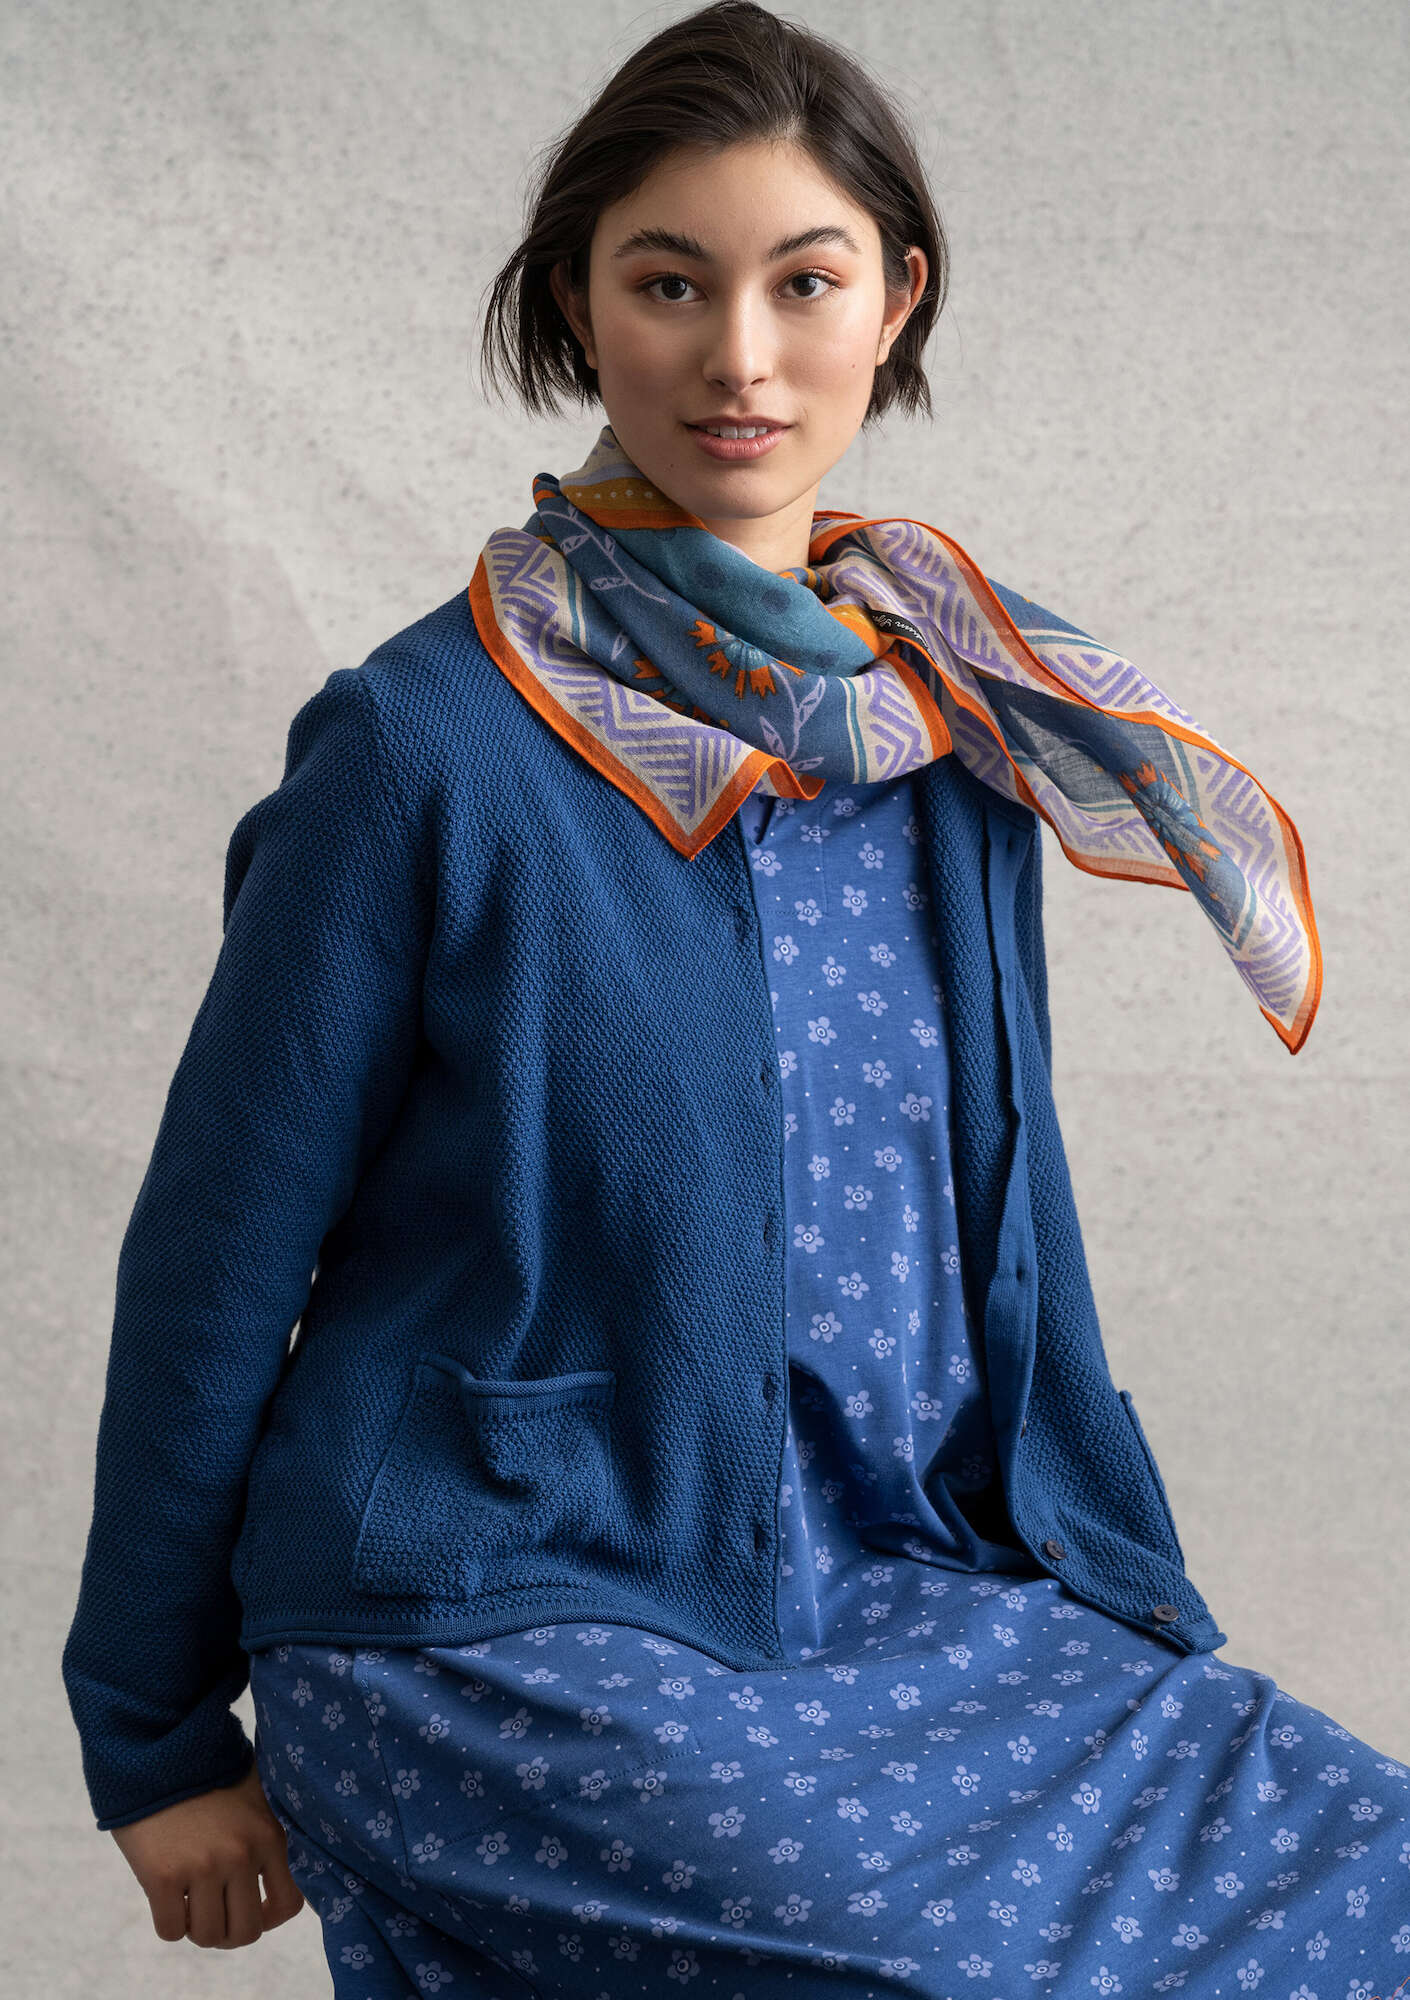 Moss-stitch knit cardigan in recycled cotton indigo blue